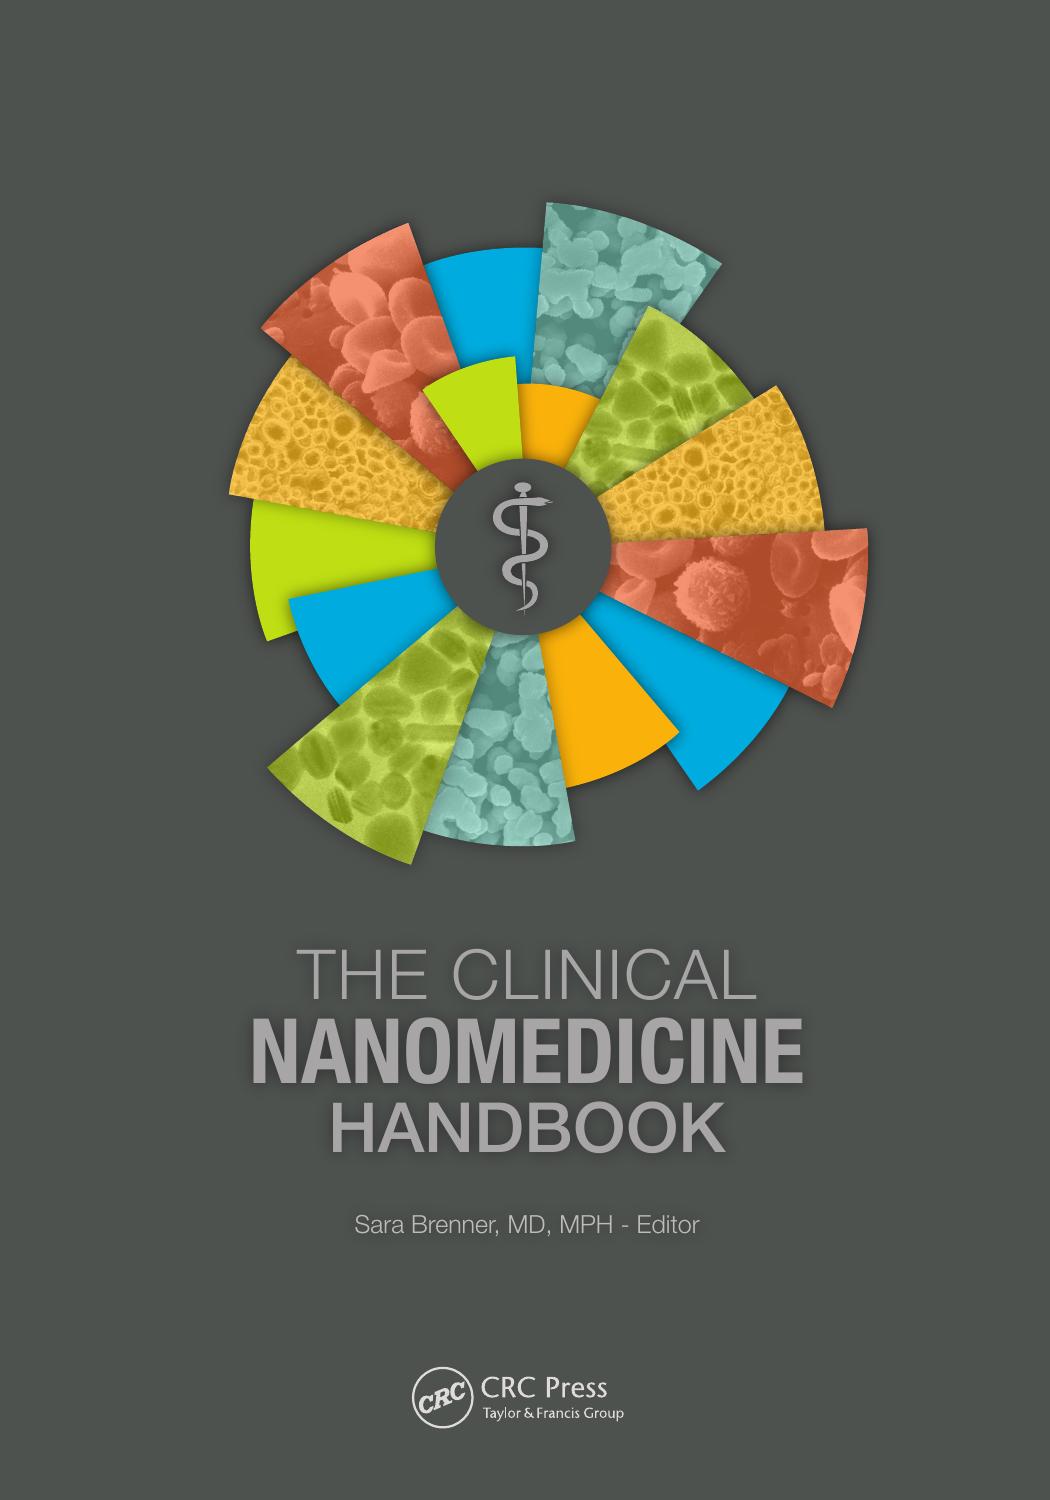 The Clinical Nanomedicine Handbook